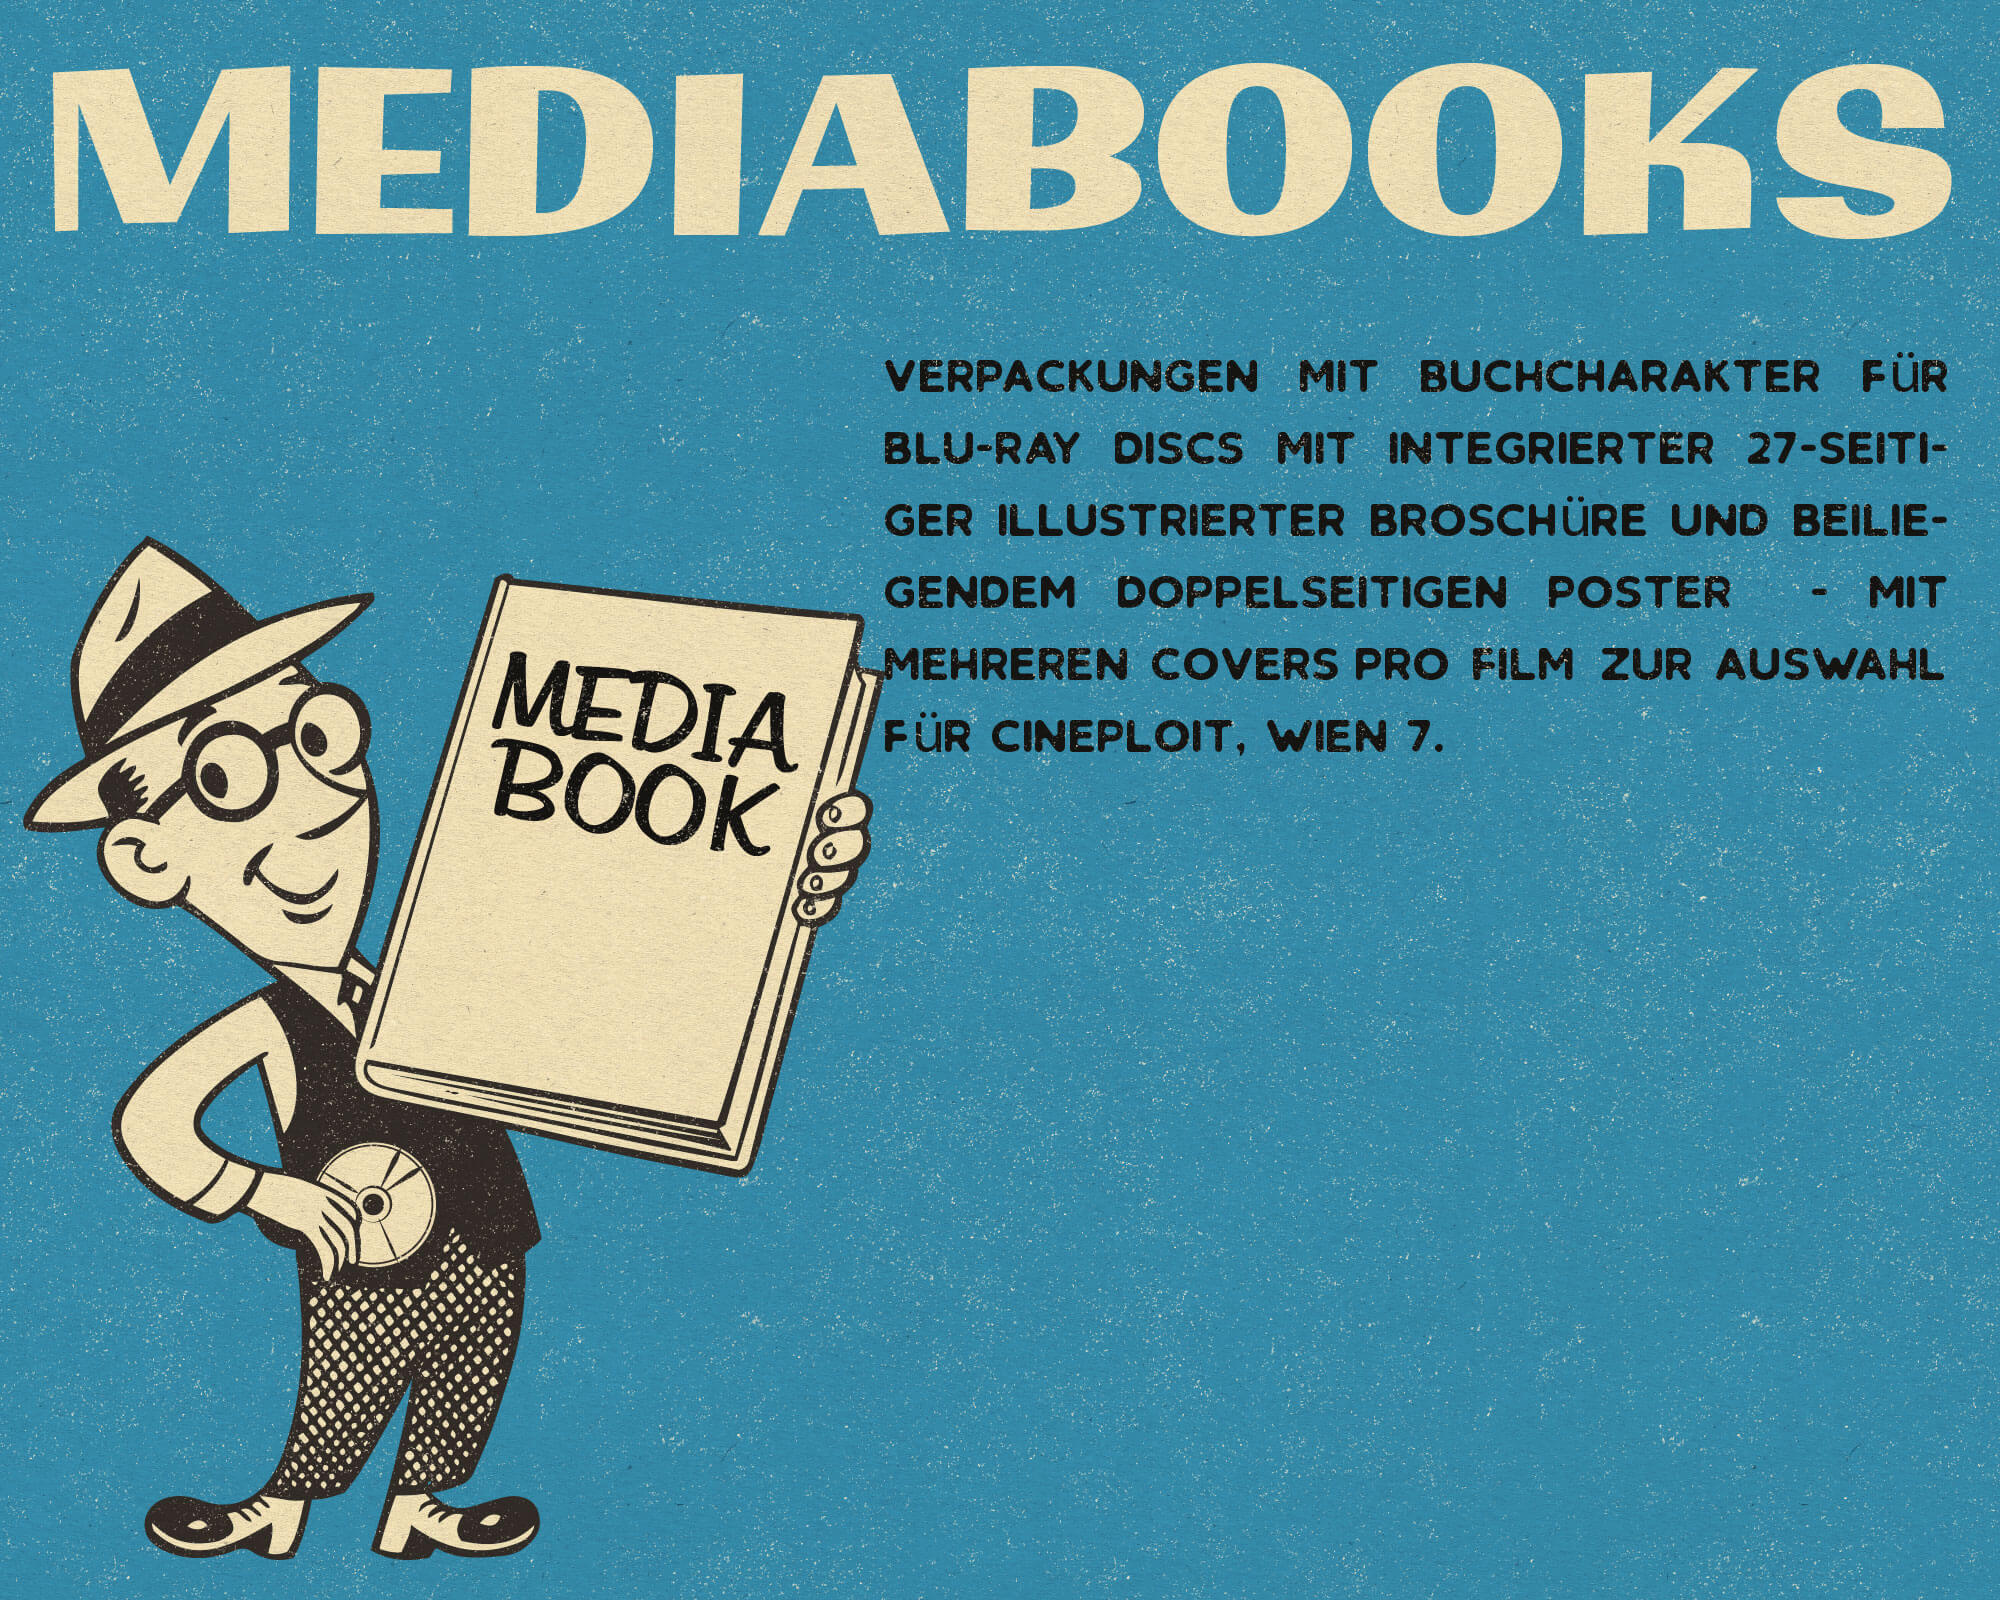 Mediabooks